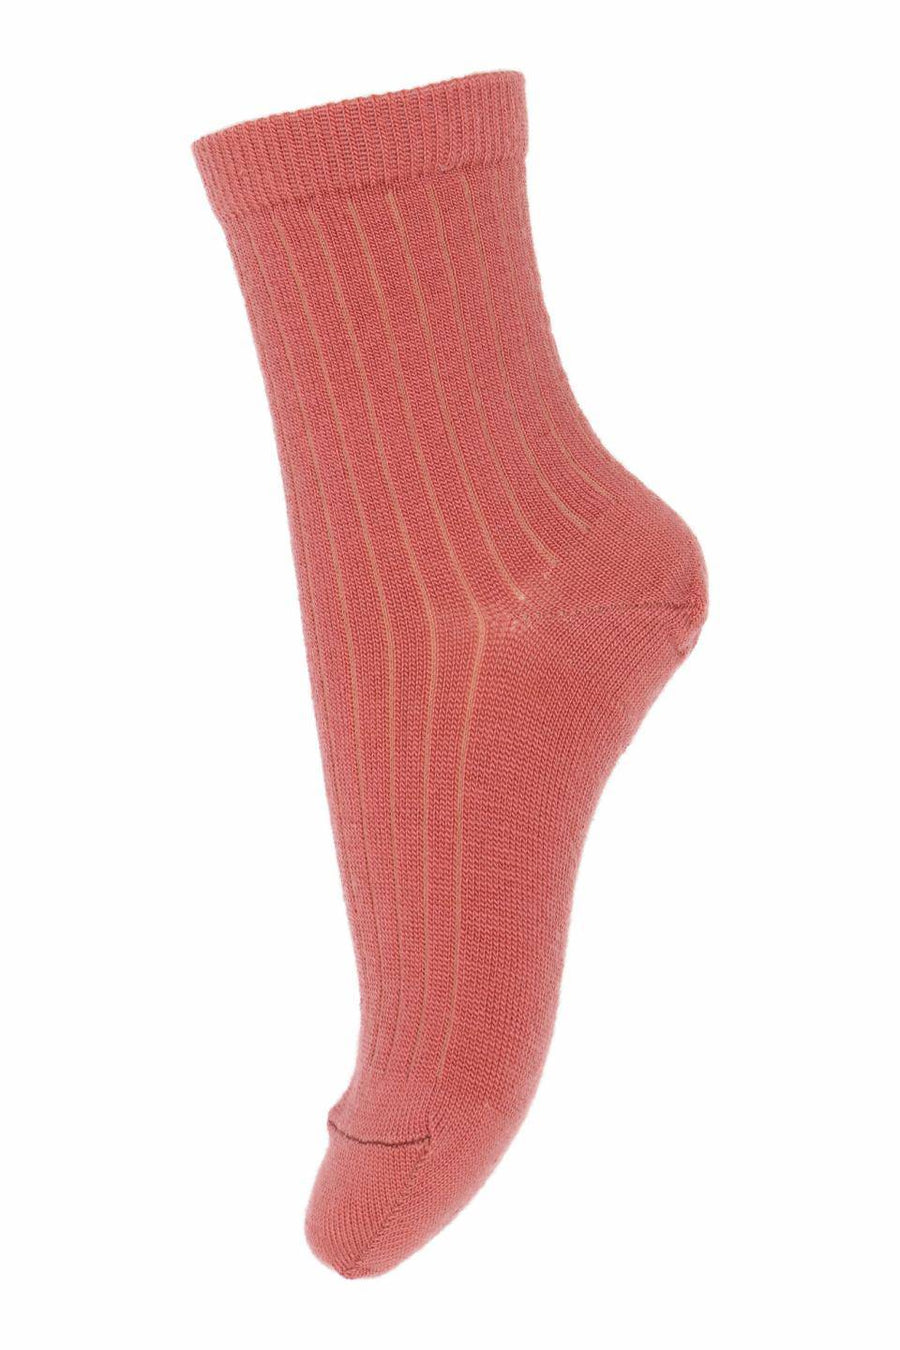 MP Denmark - wool rib socks - 10-718-0 831 - canyon rose - Hyggekids